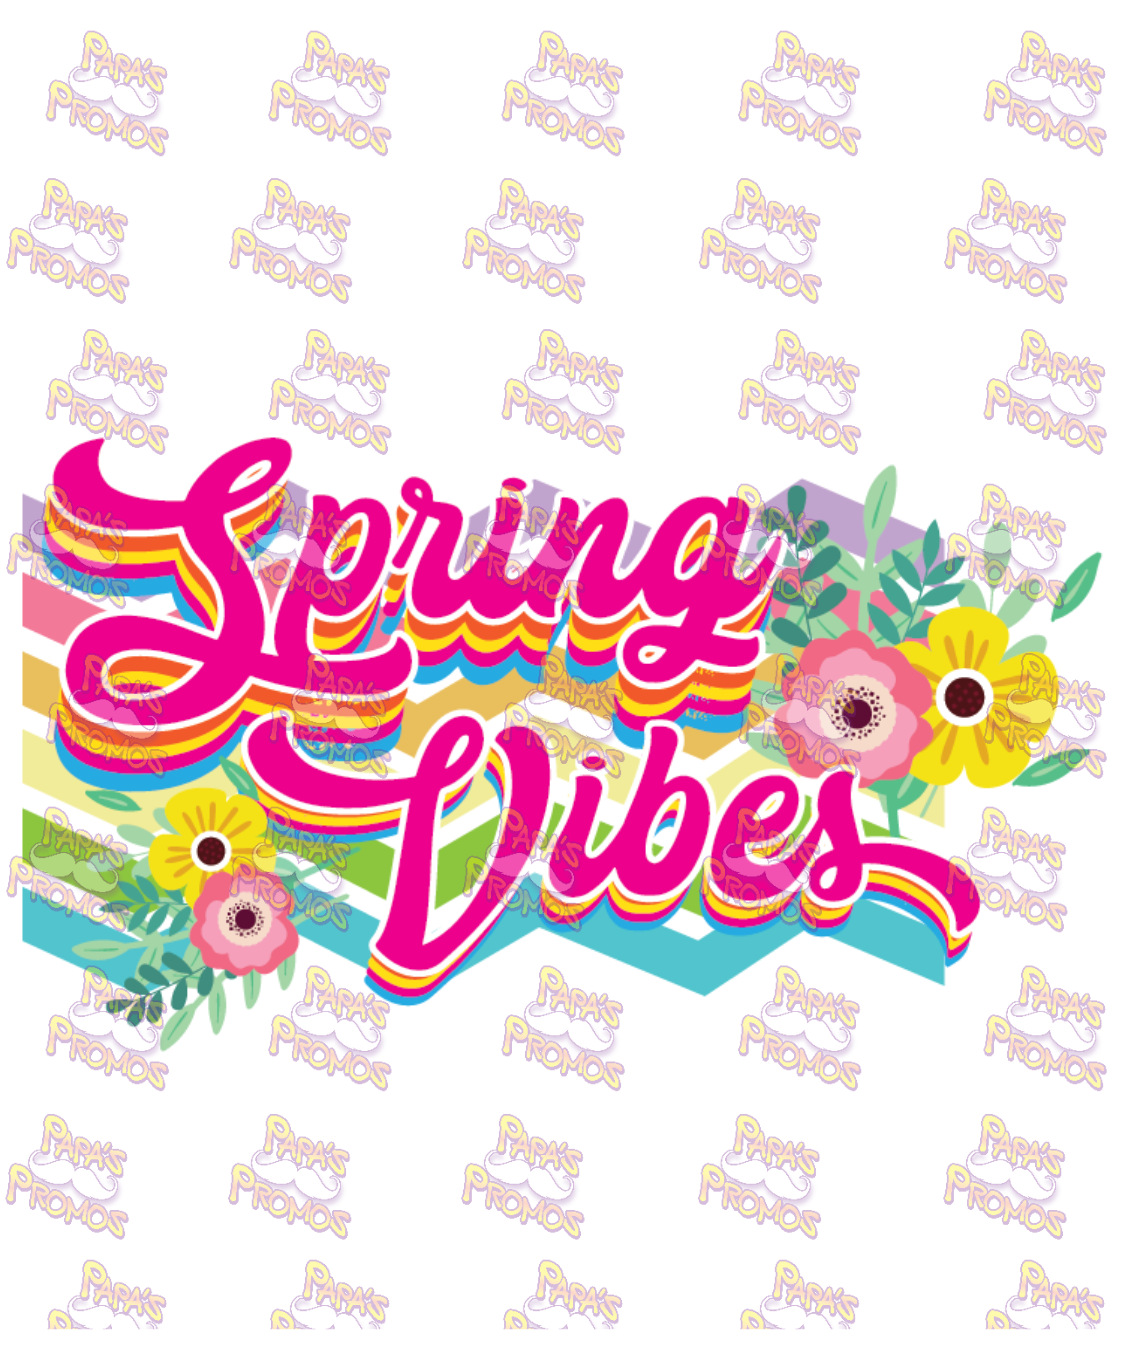 Spring Vibes - Wavy Damn Good Decal